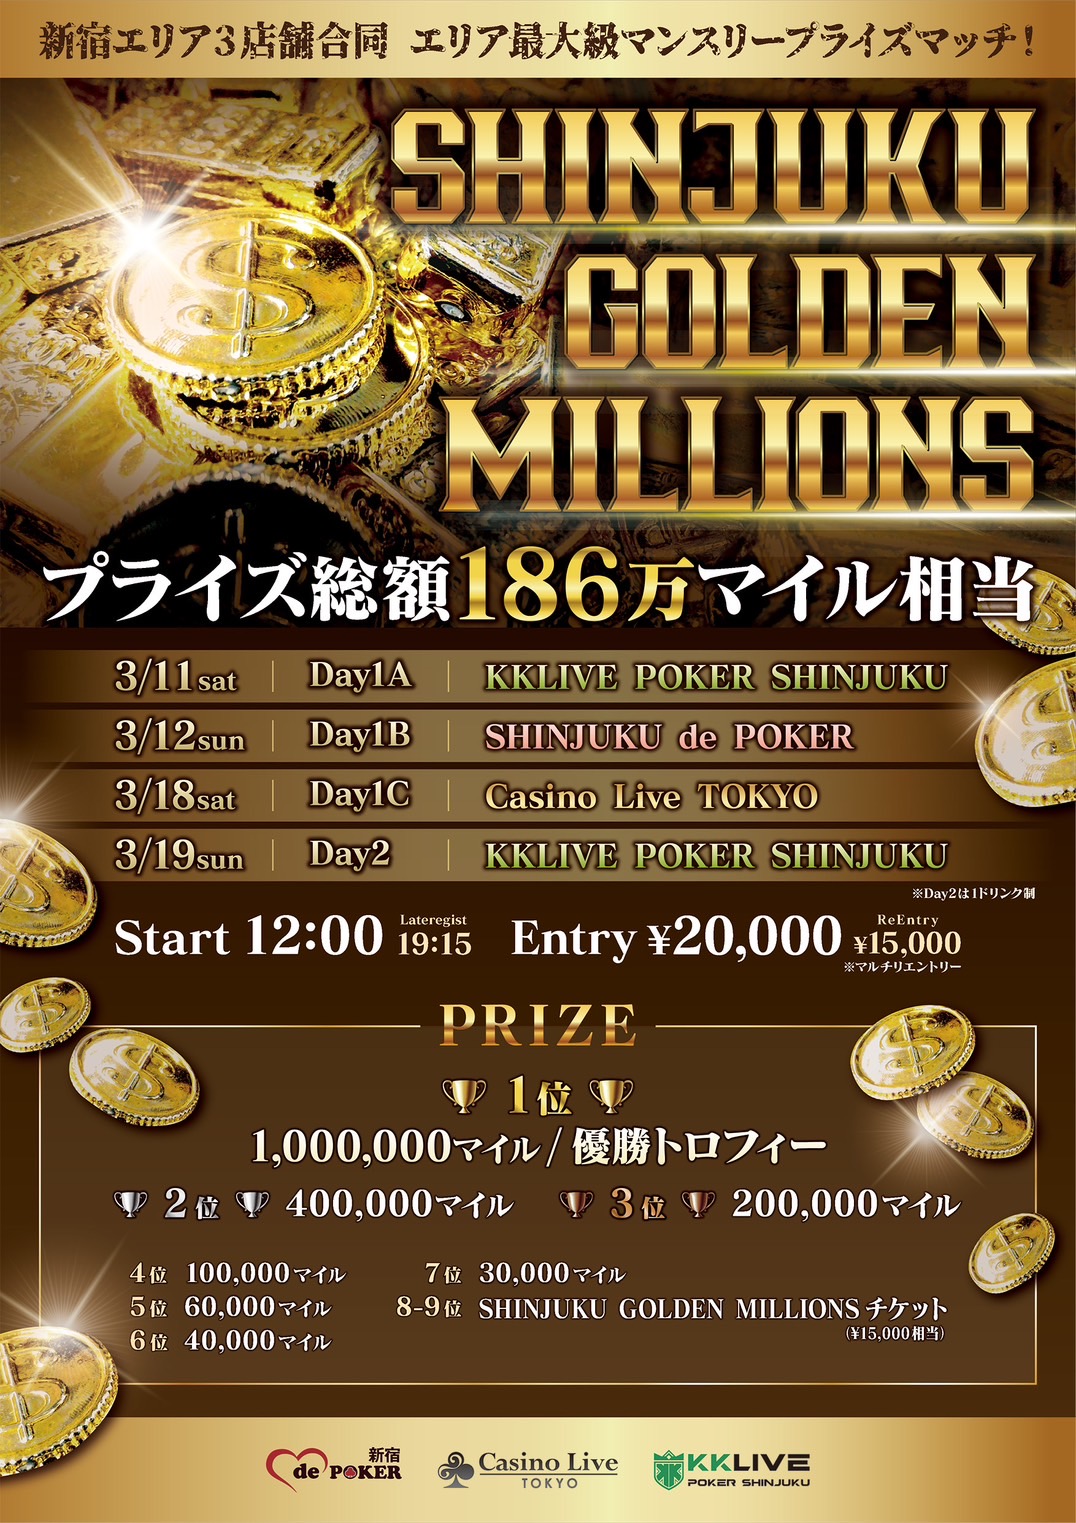 Shinjuku Golden Millions